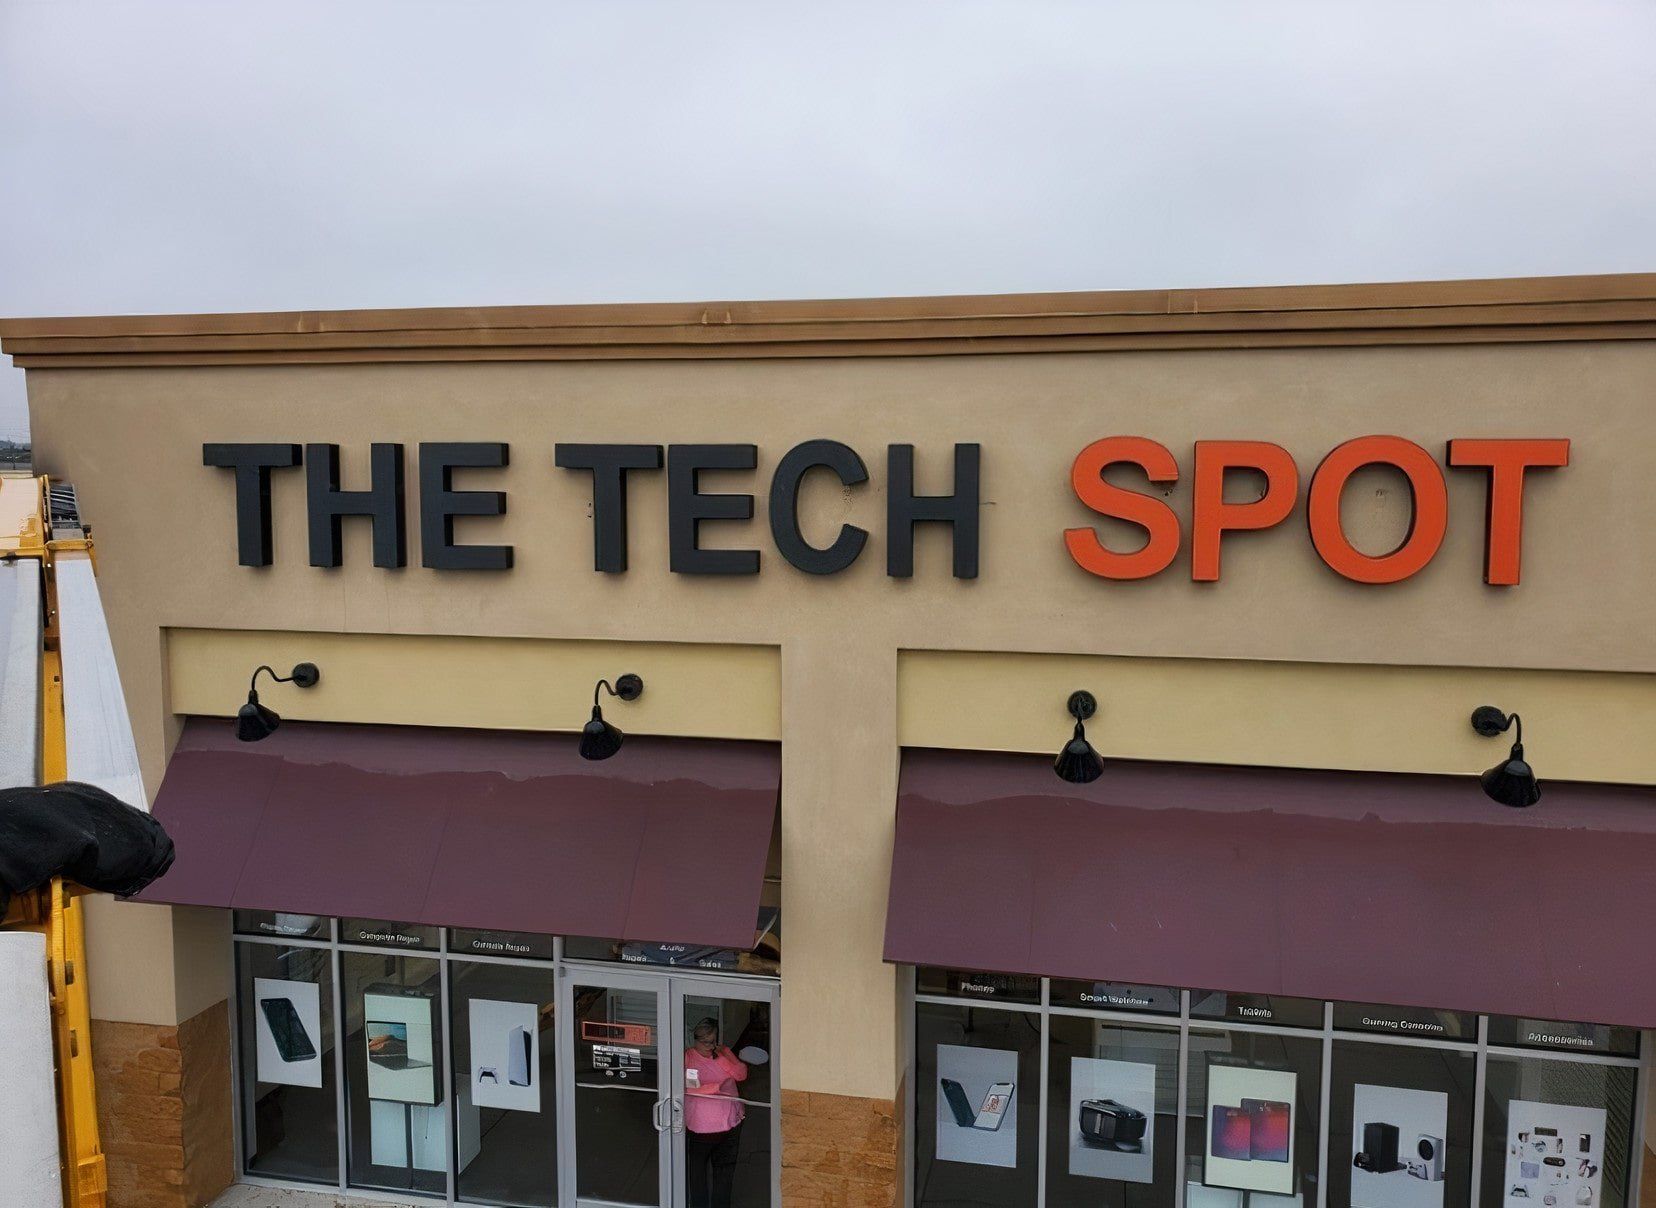 the tech spot - channel letter install in greenville sc